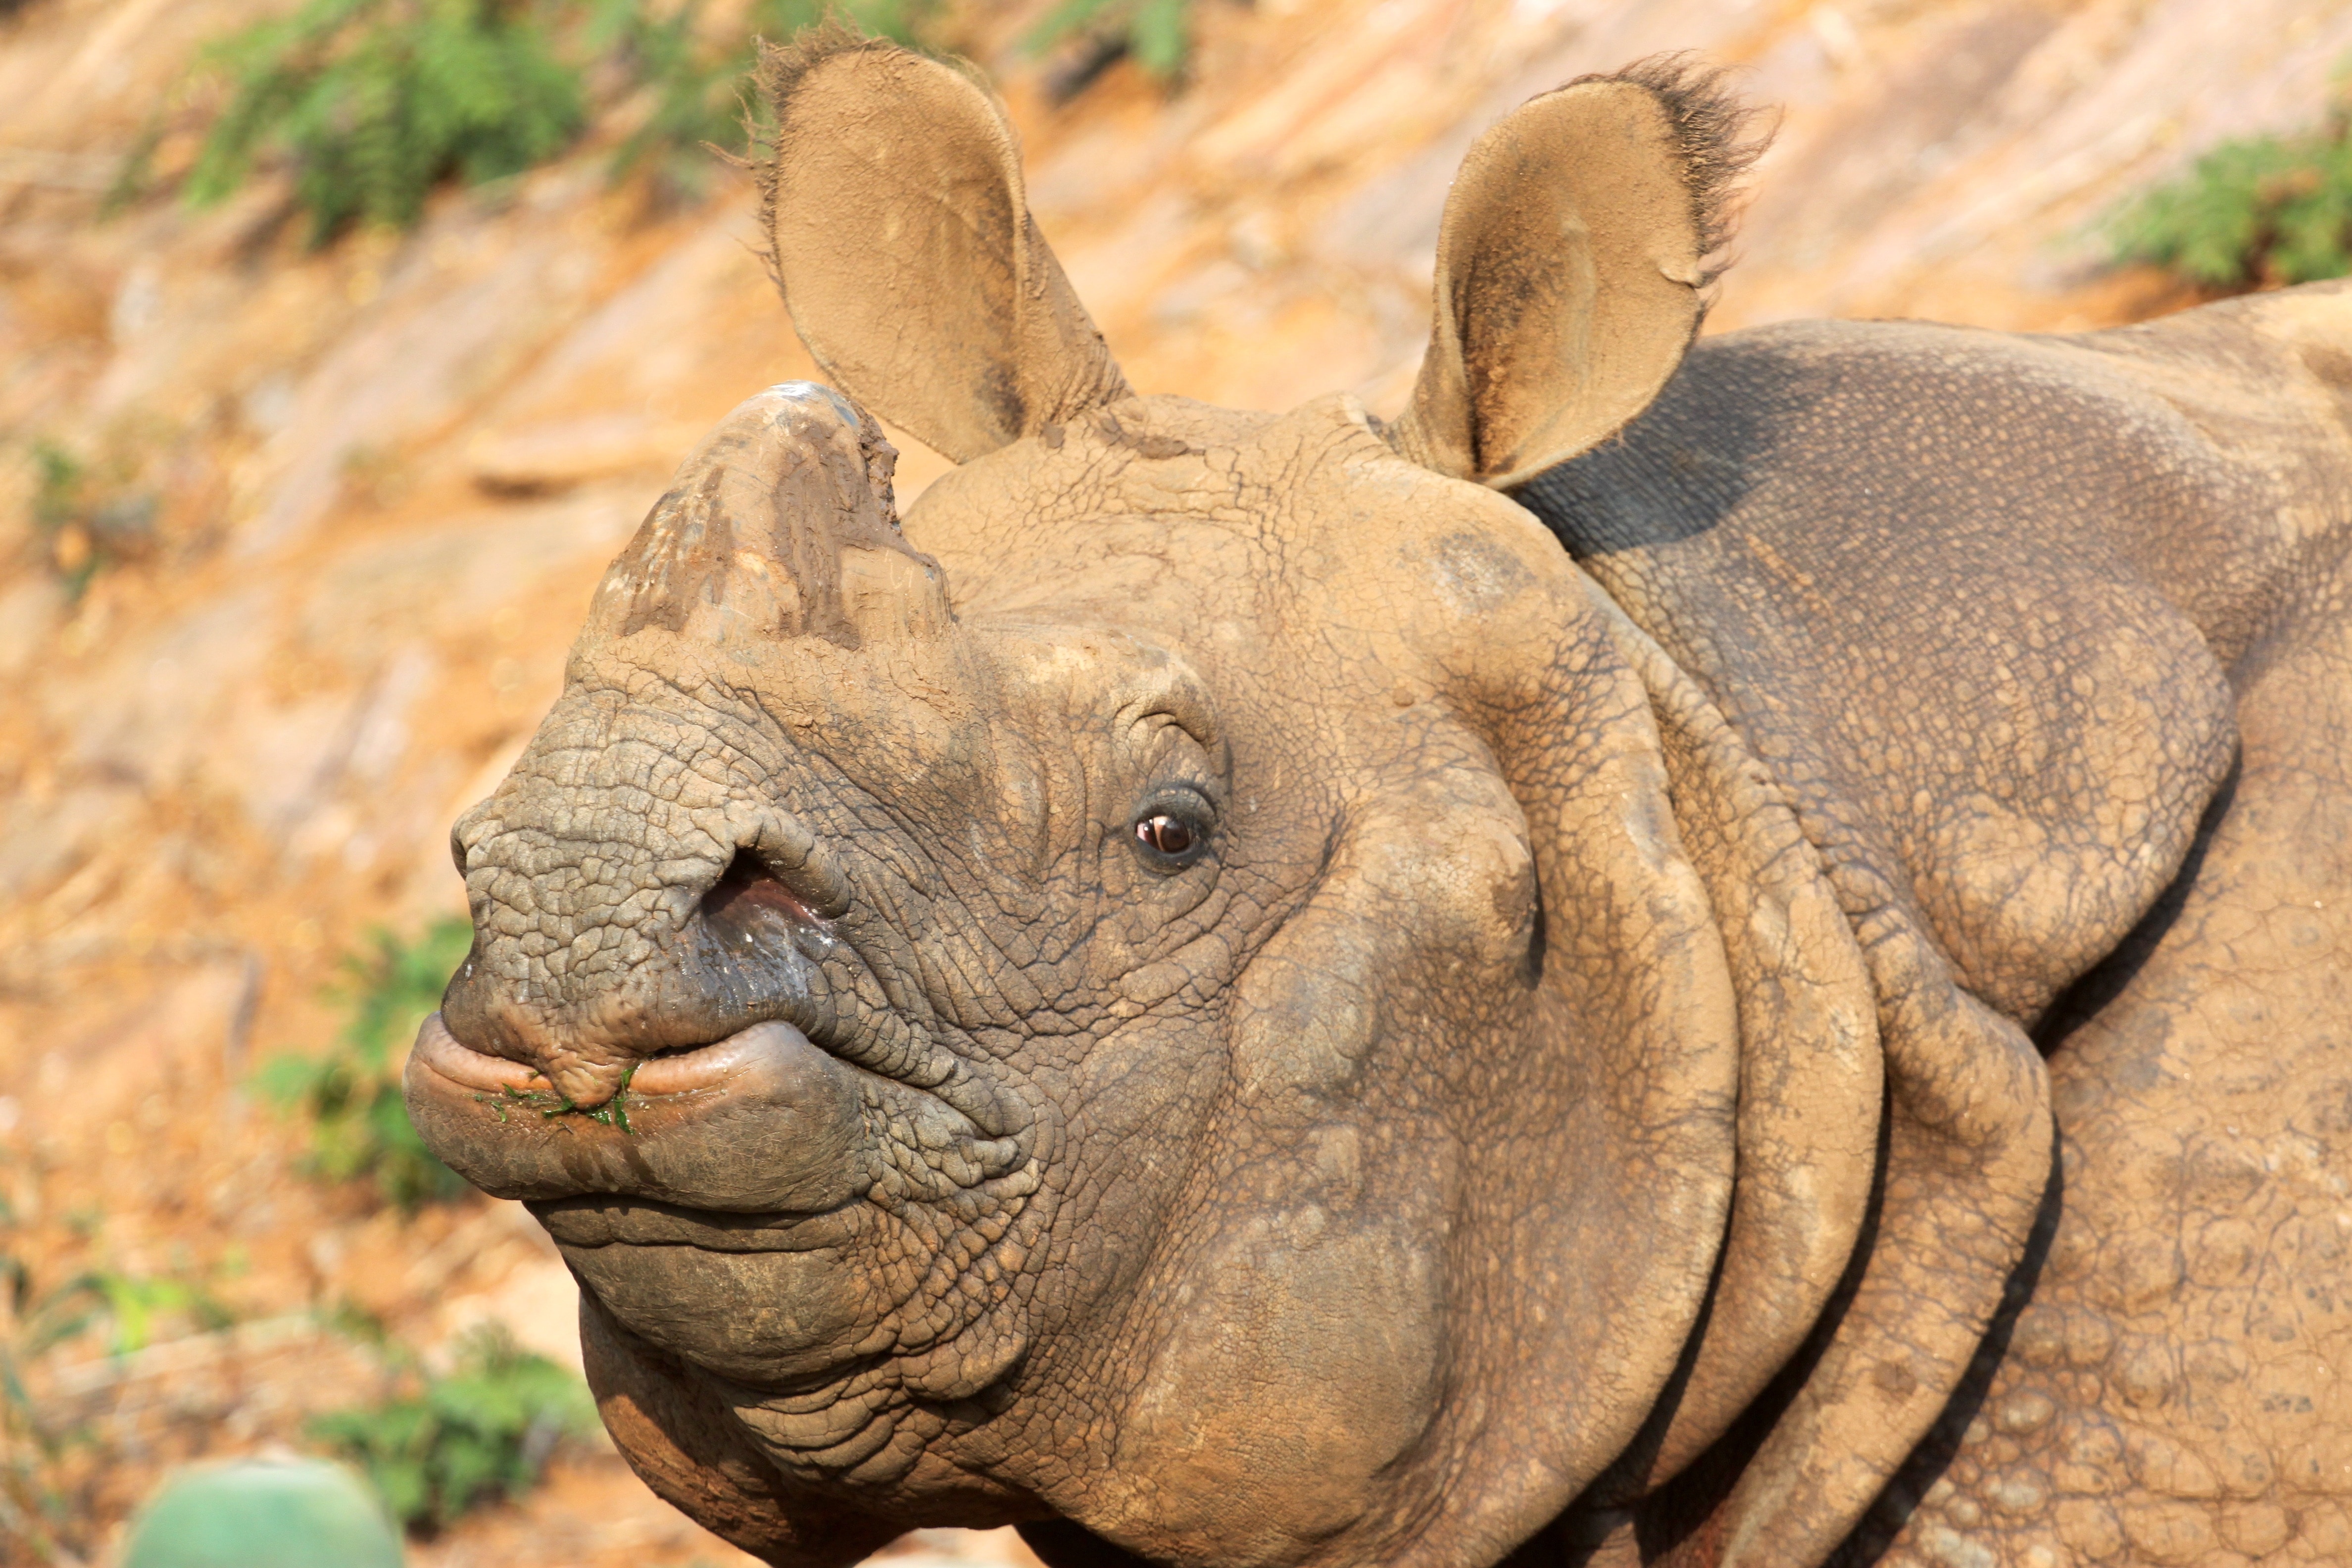 Rhino, Zoo, India One Horned Rhinoceros, animal wildlife, animals in the wild